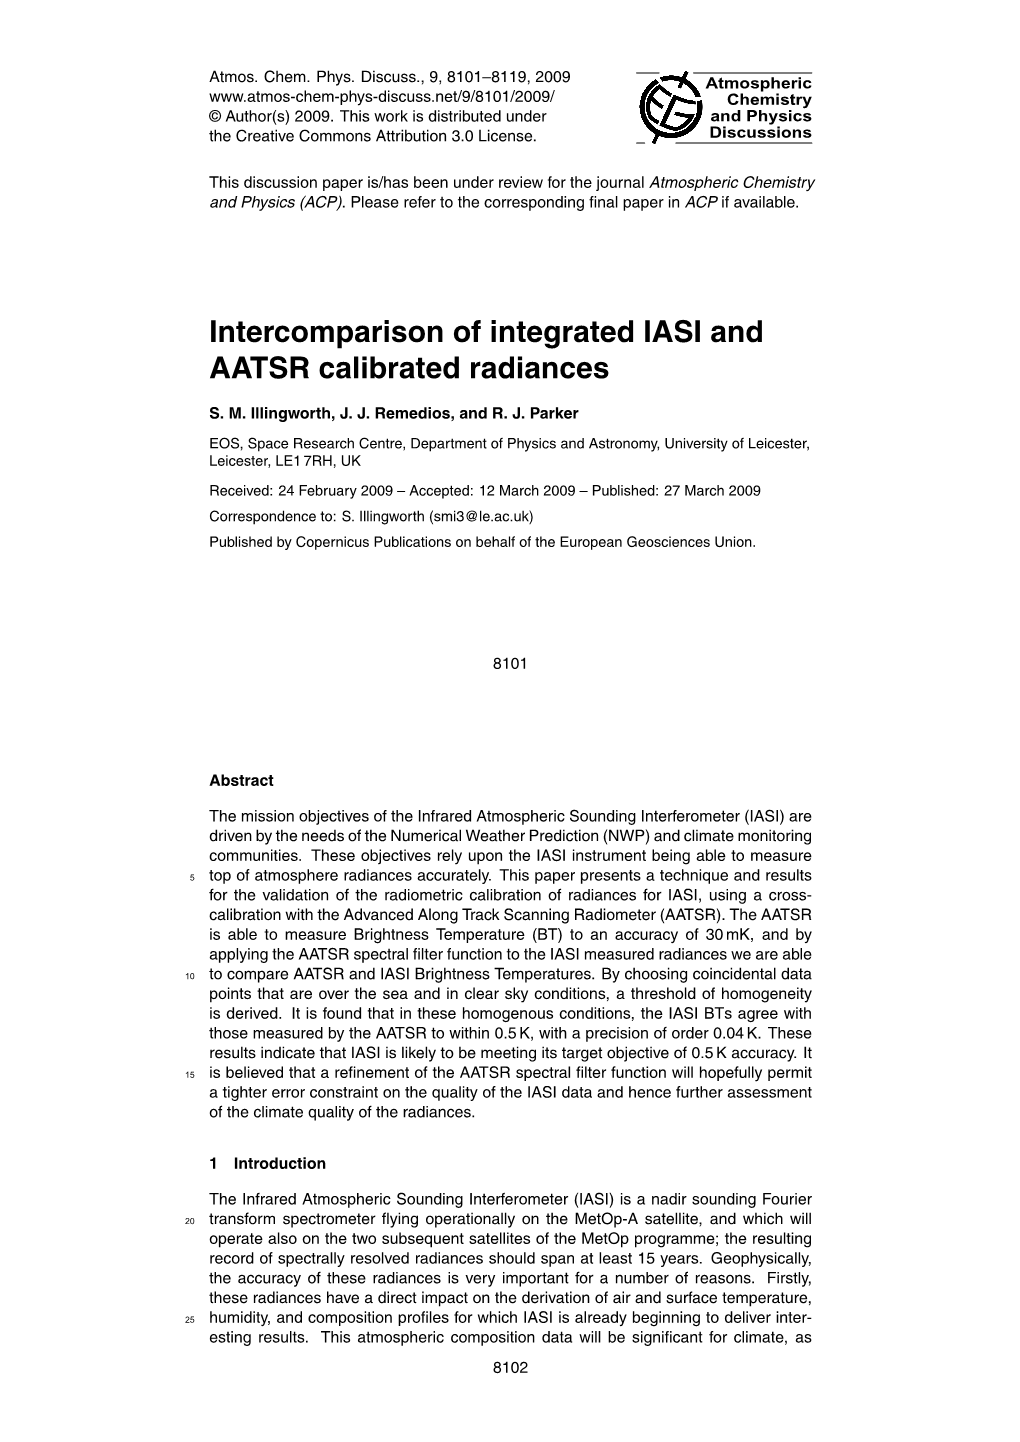 Intercomparison of Integrated IASI and AATSR Calibrated Radiances